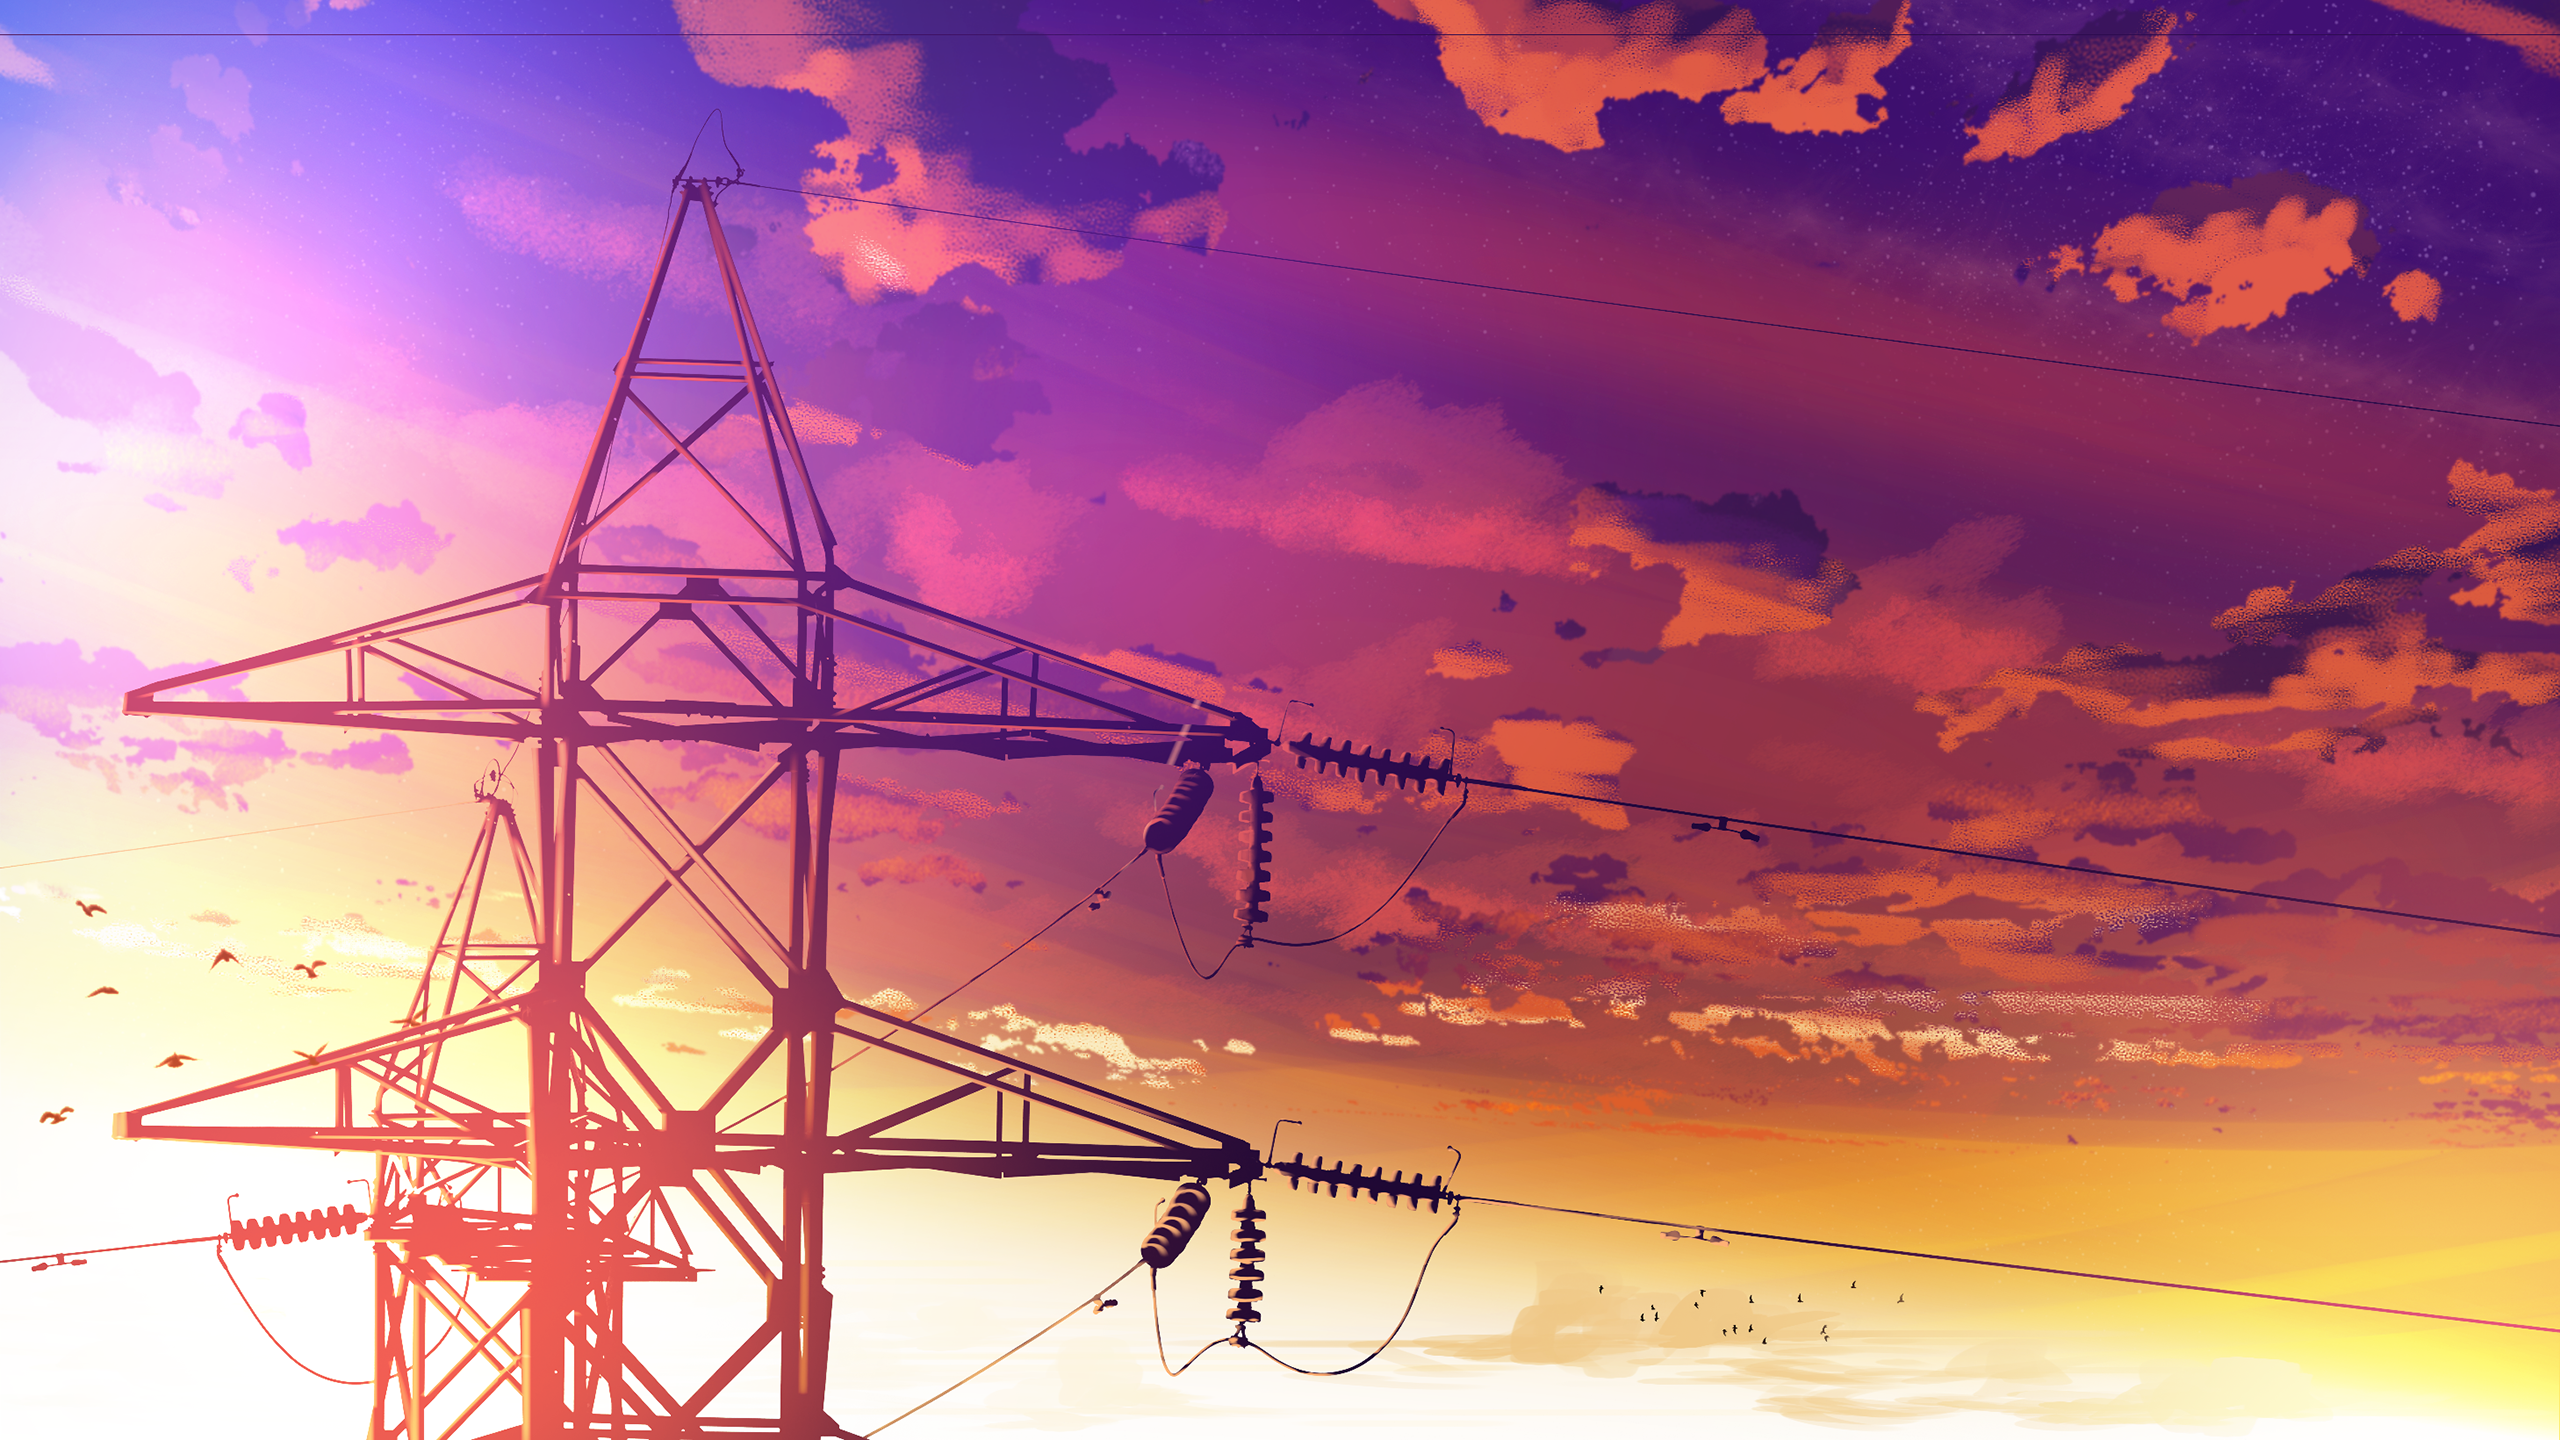 Anime Styled Evening Sunset [2560x1440]